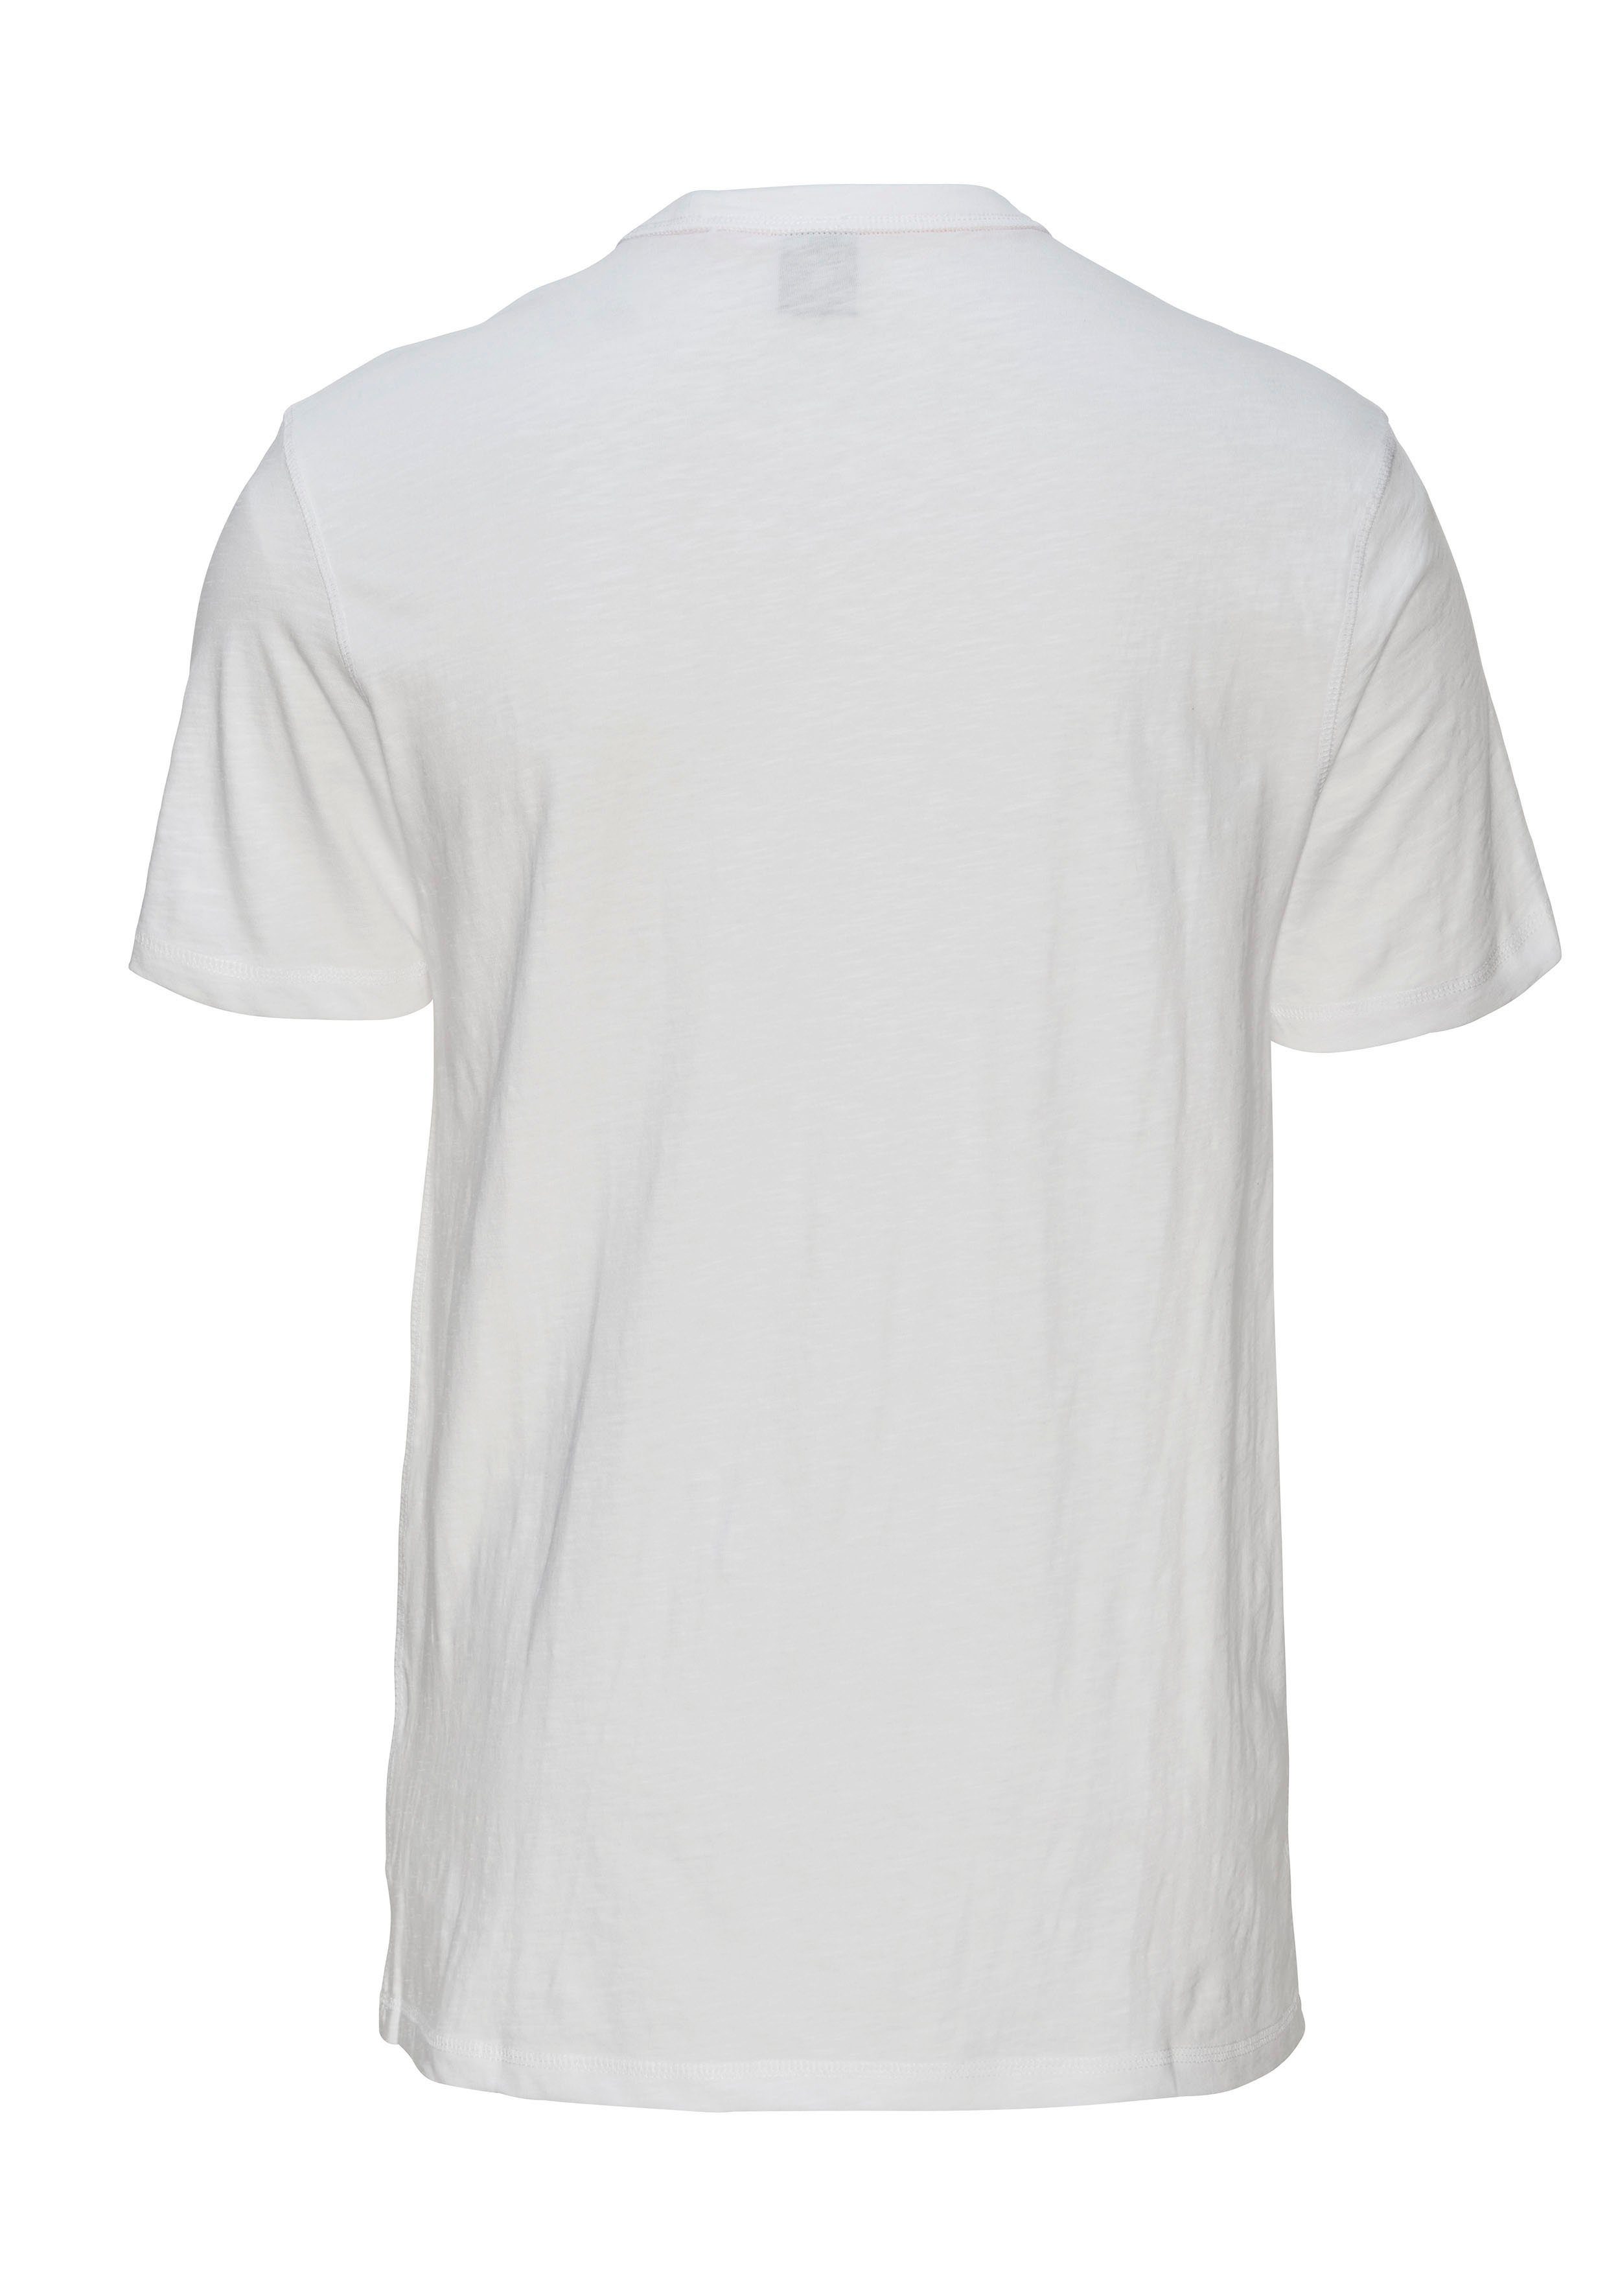 mit Tegood 100_White T-Shirt ORANGE Rundhalsausschnitt BOSS